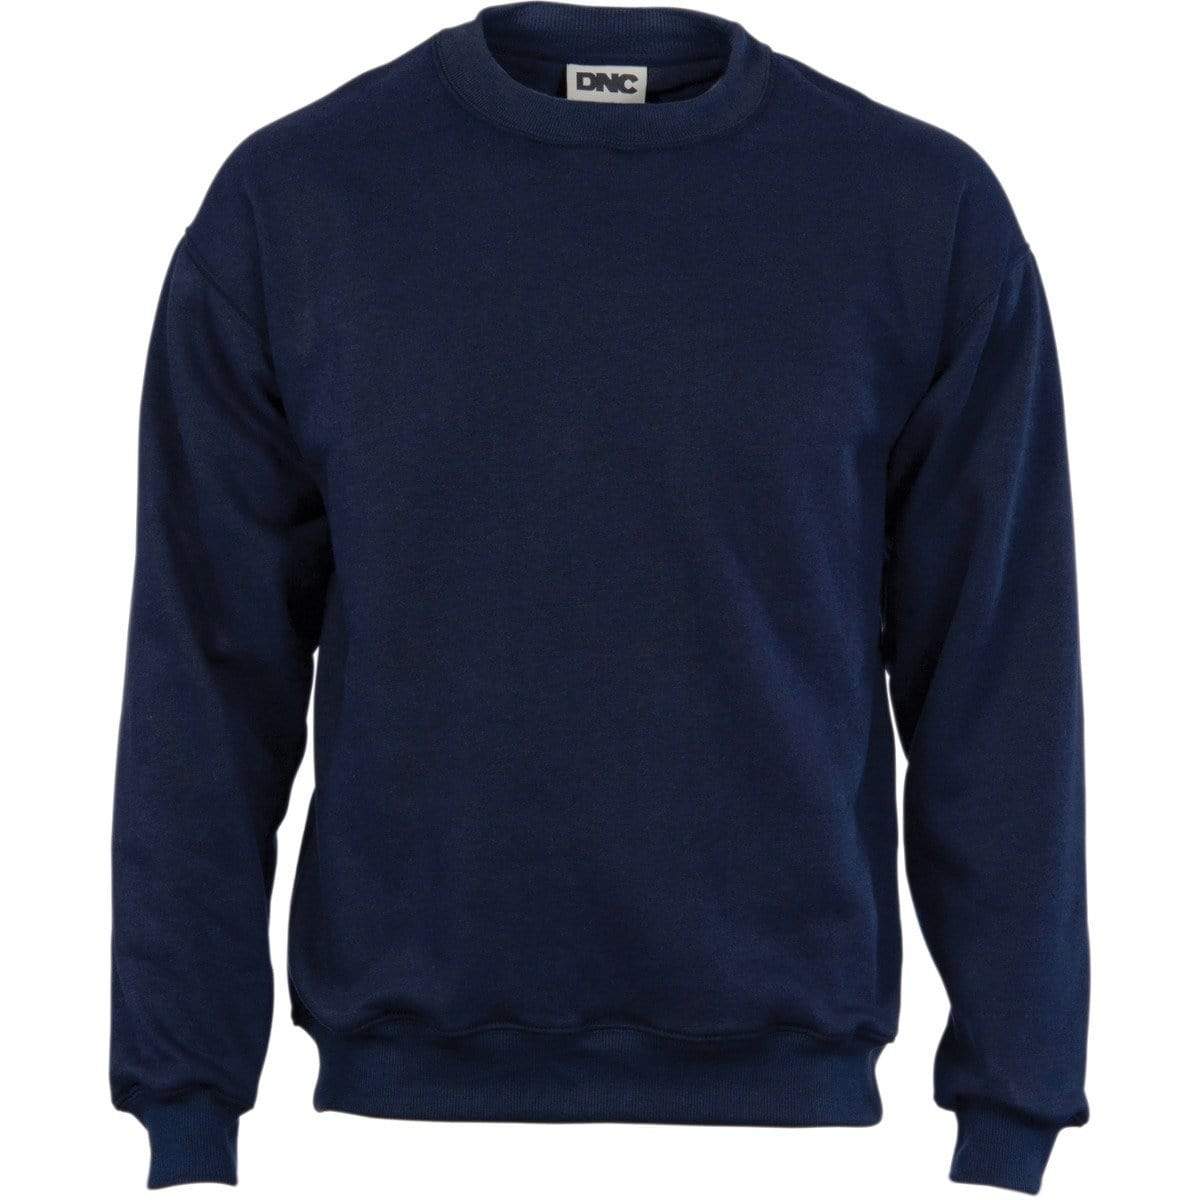 Dnc Workwear Crew Neck Fleecy Sweatshirt (Sloppy Joe) - 5302 Corporate Wear DNC Workwear Navy XS 